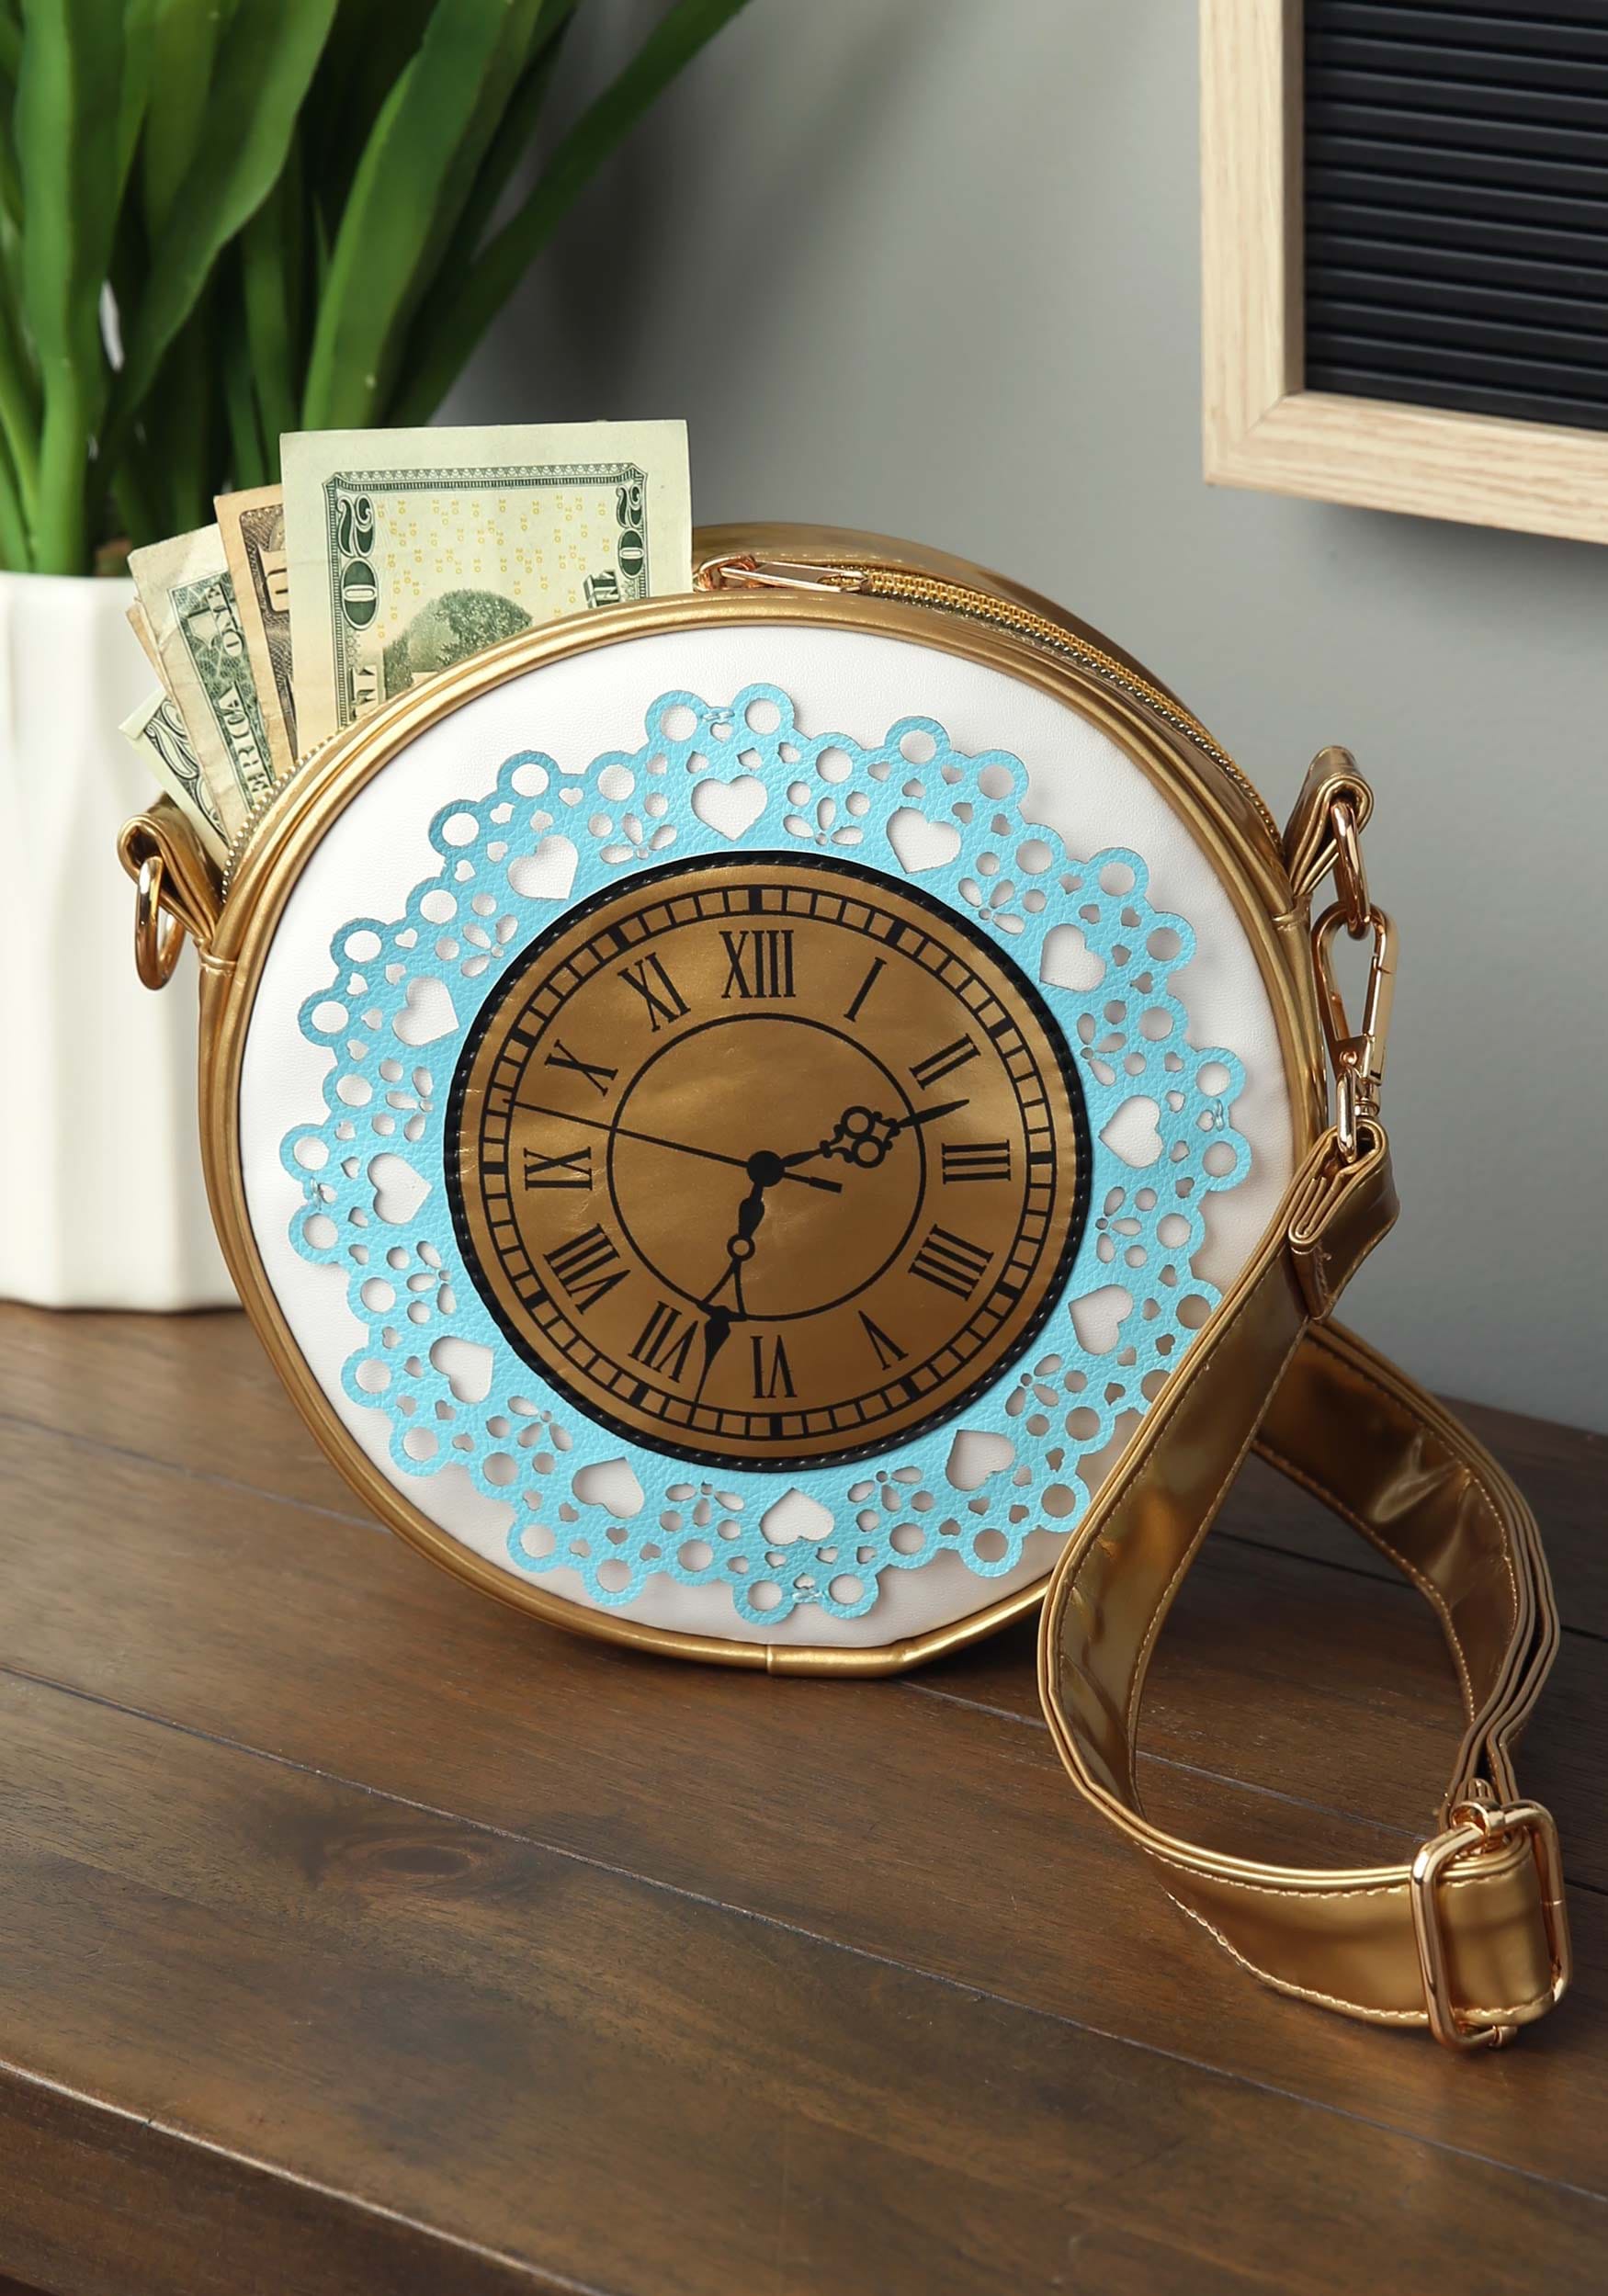 https://images.fun.com/products/65888/2-1-179355/alice-in-wonderland-clock-purse-alt-1.jpg